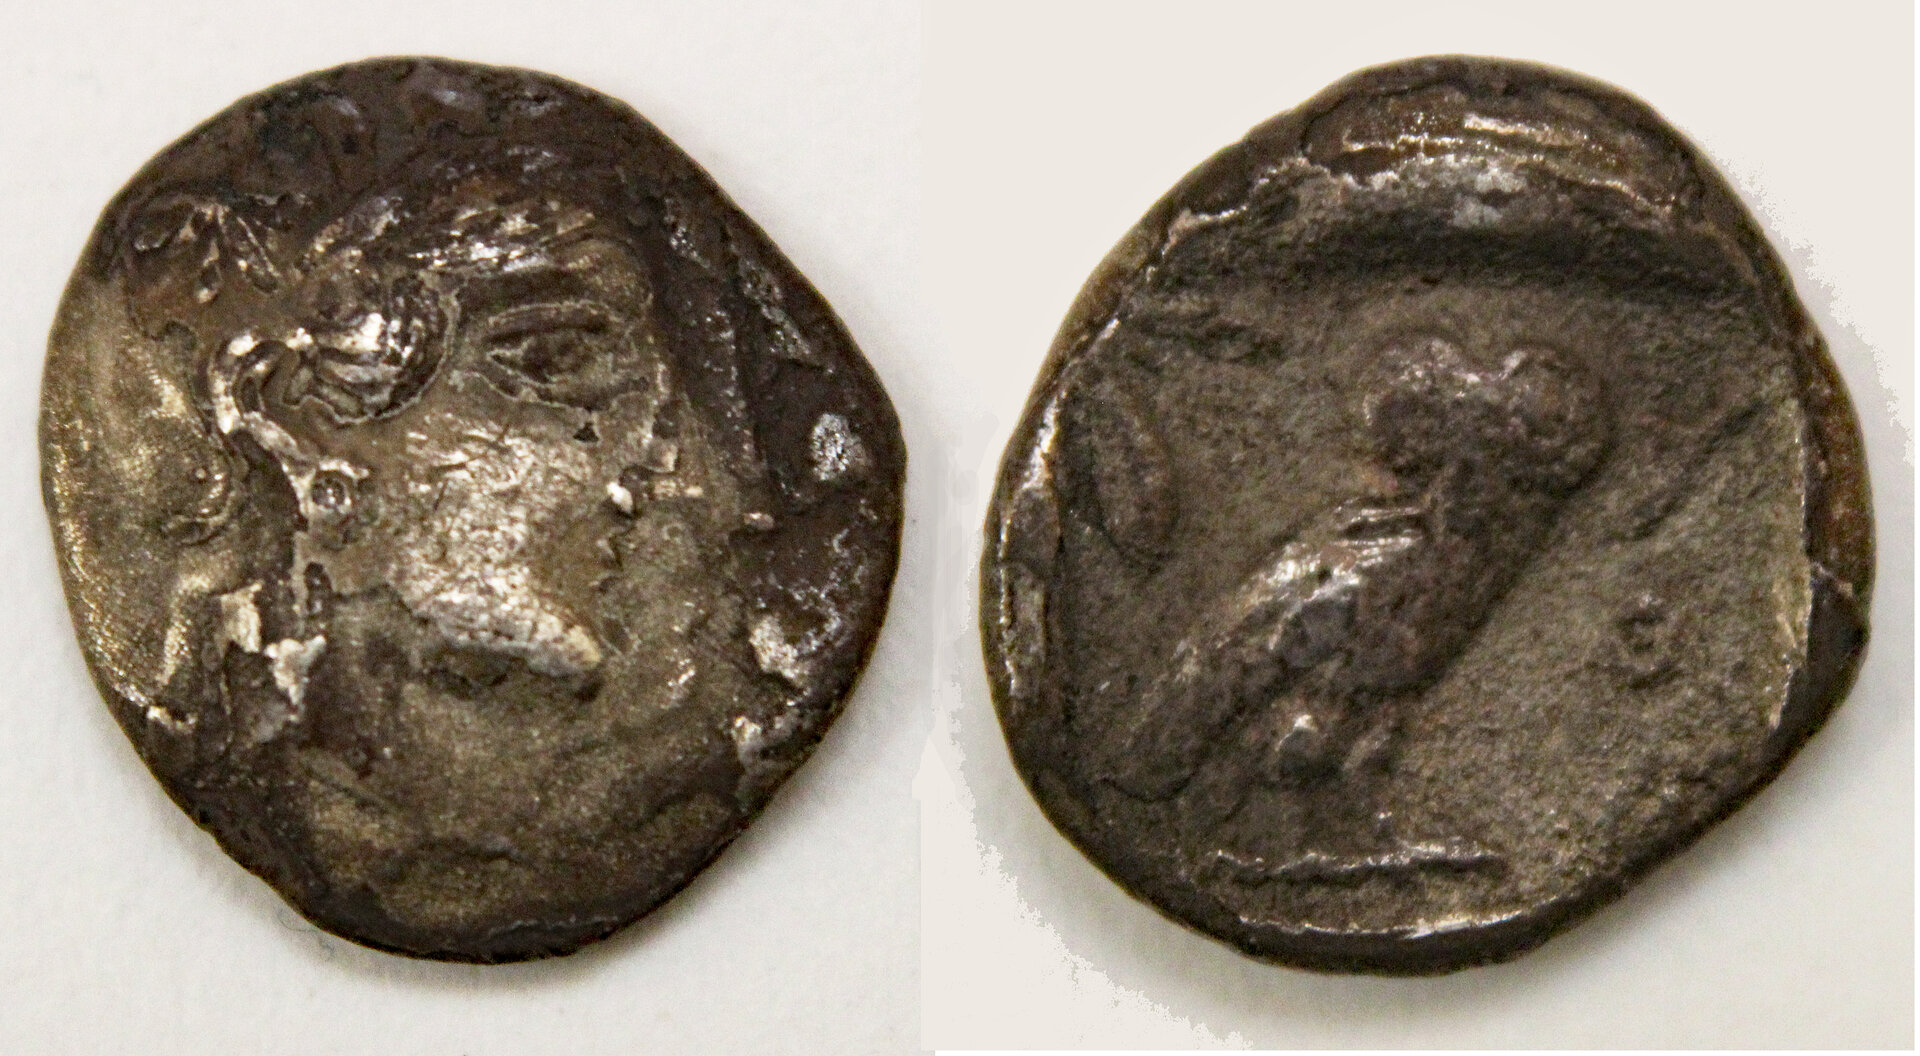 D-Camera Athens drachm 4th century BC 3.8 grams Israel 4-28-21.jpg